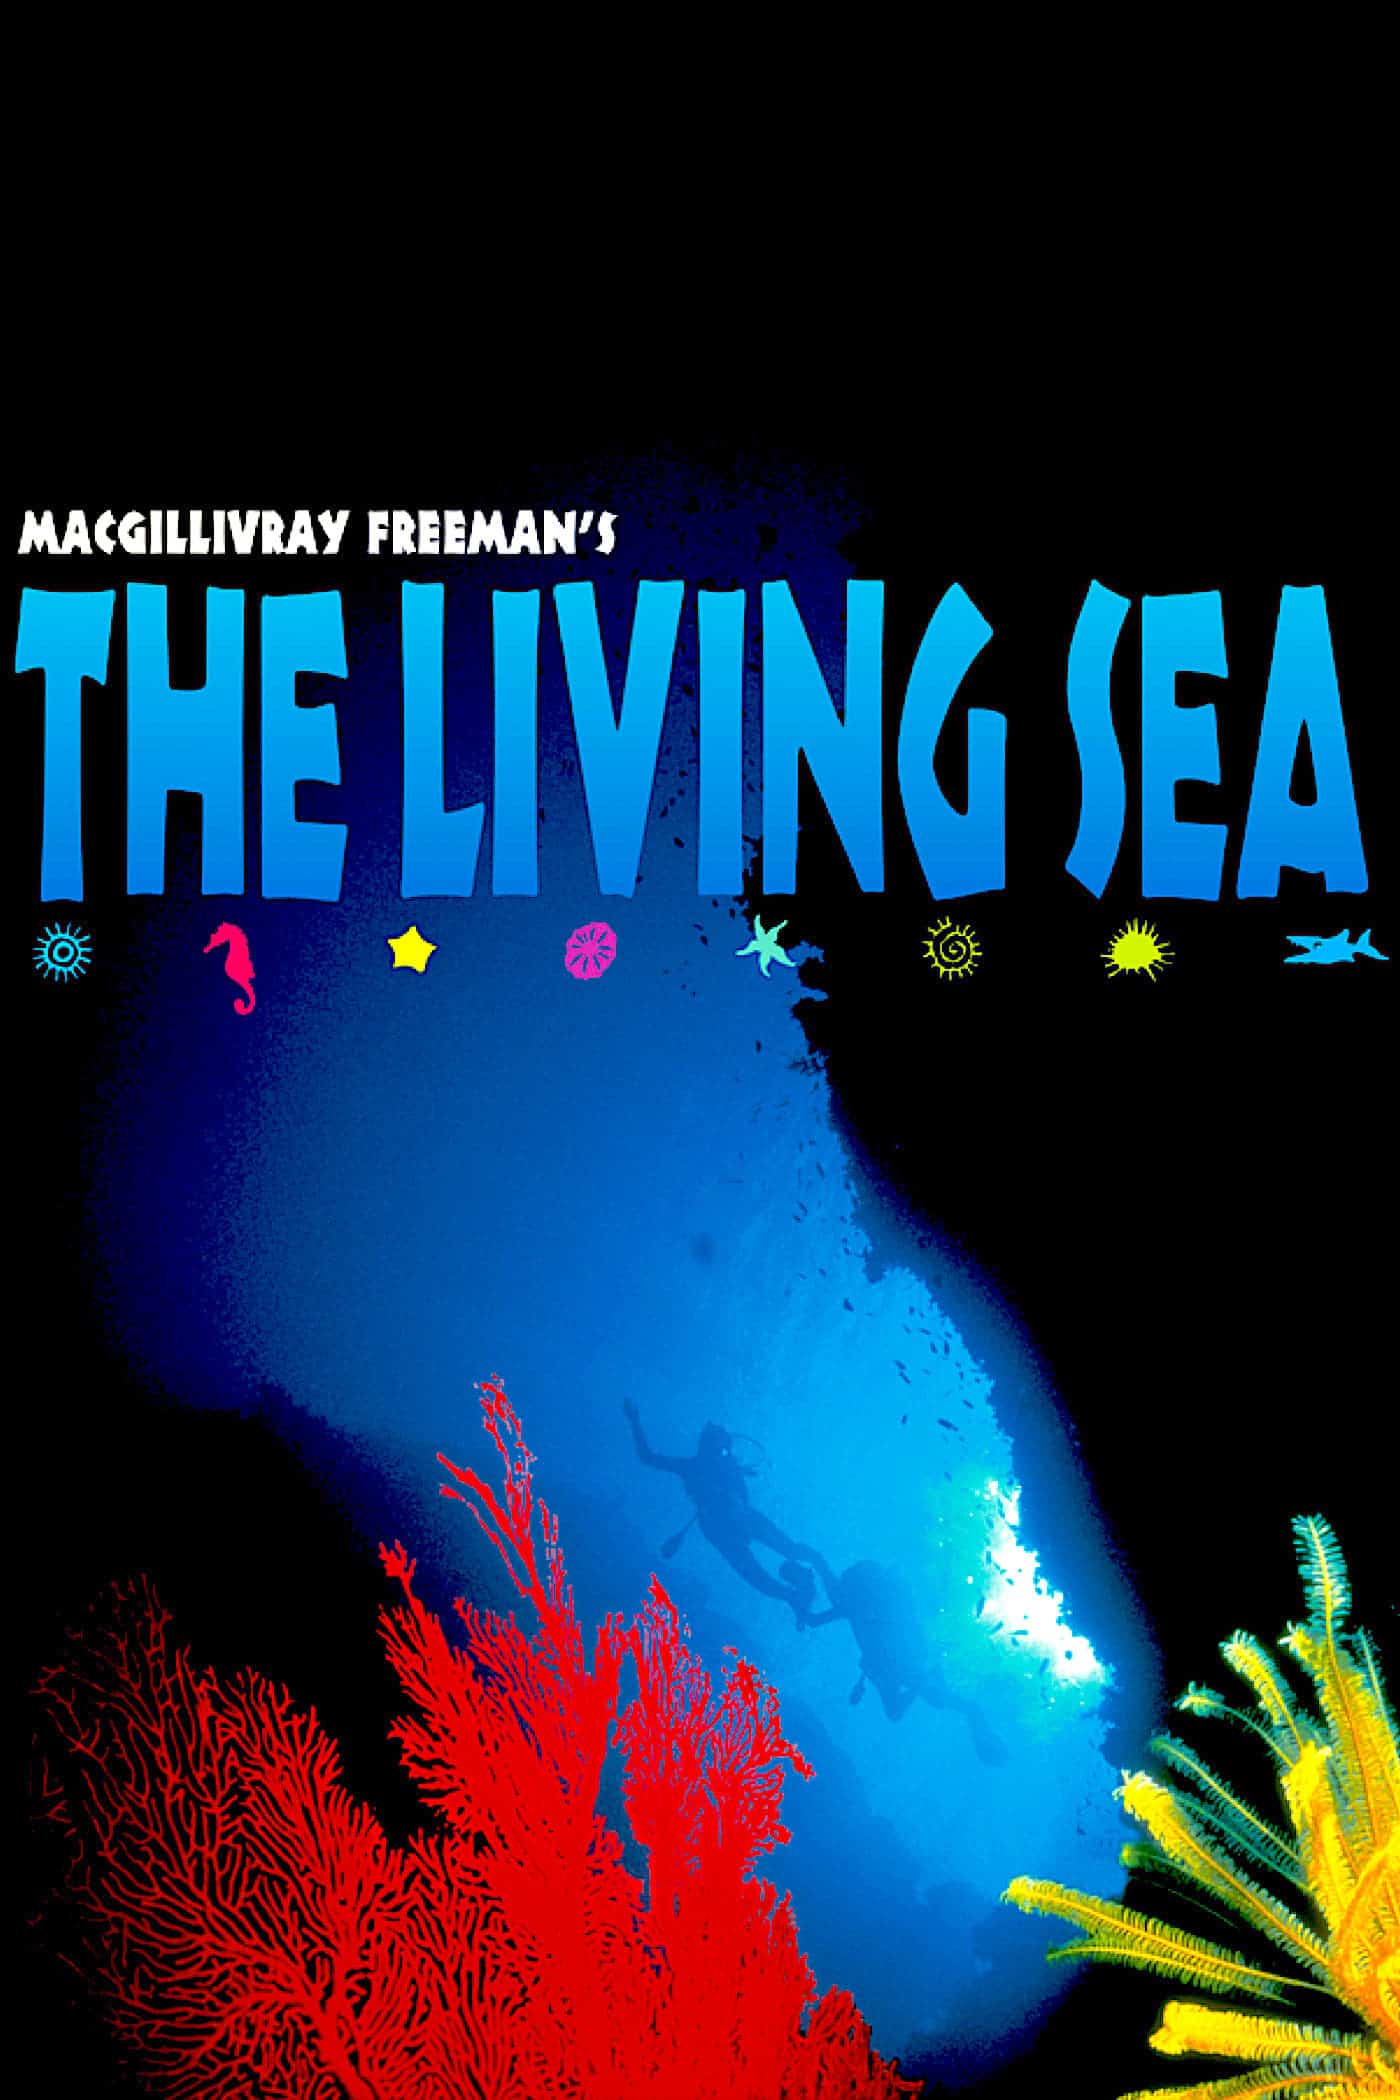 Plakat von "The Living Sea"